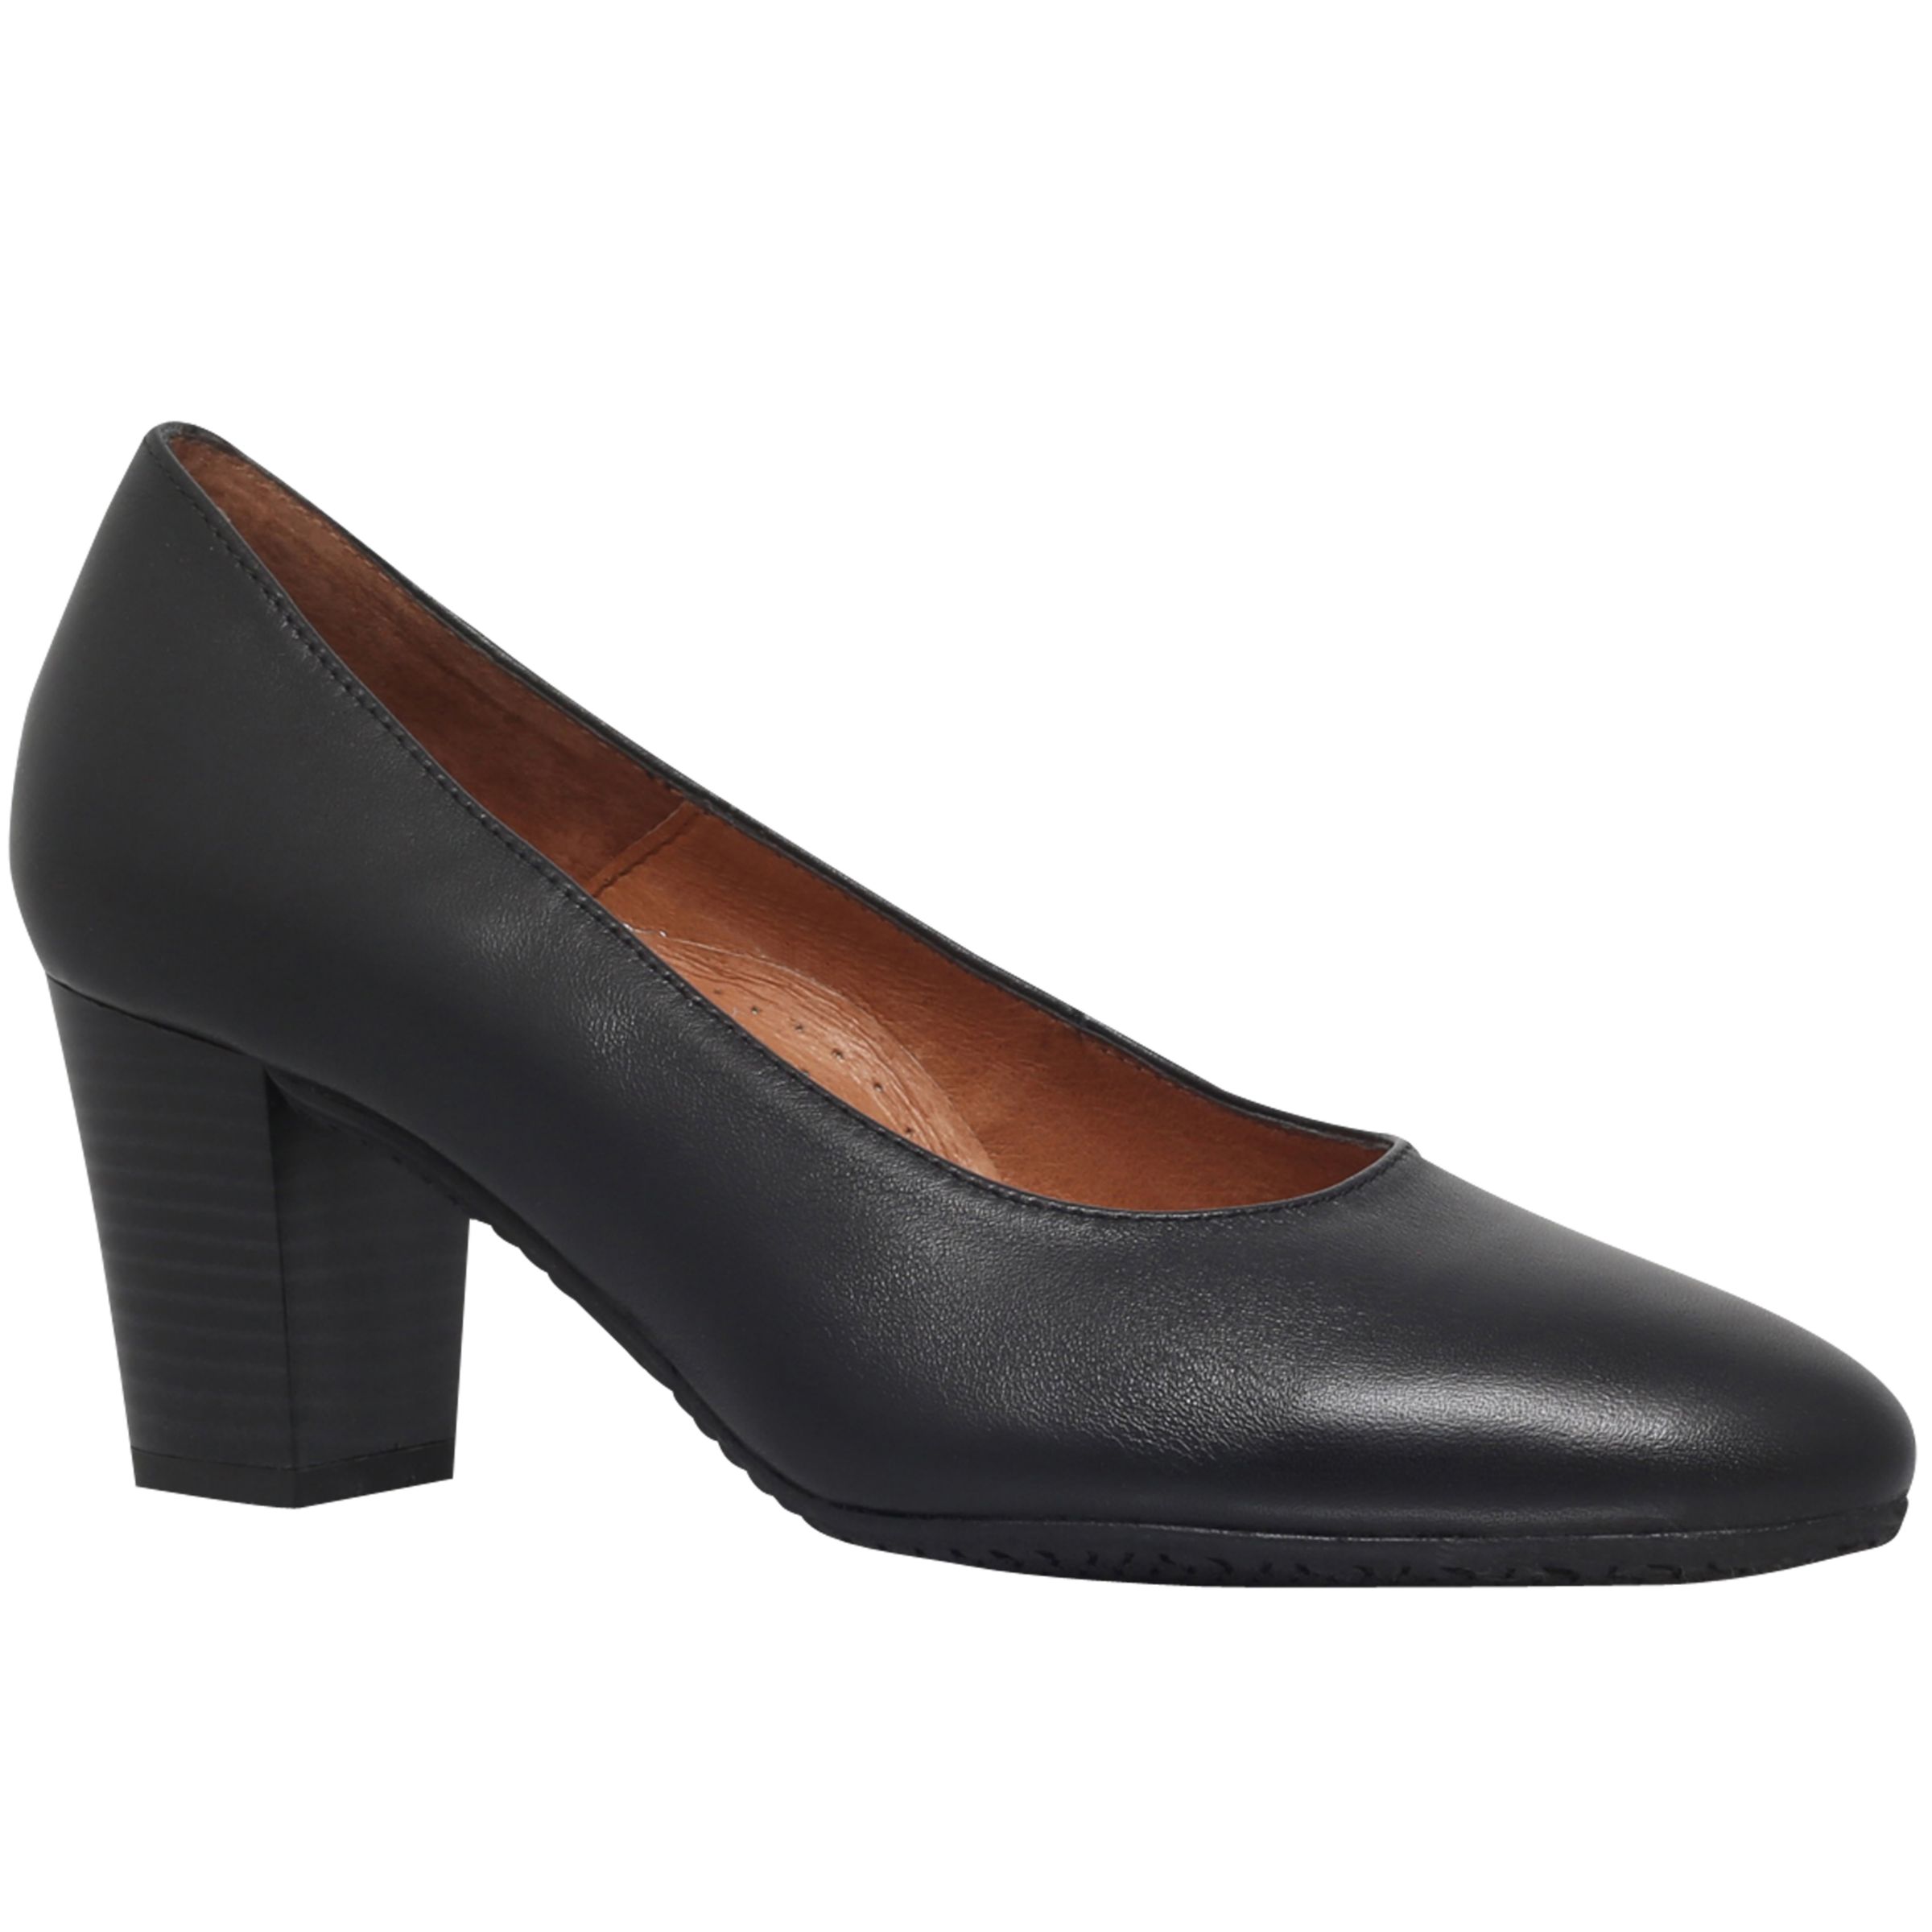 Carvela Comfort Air Block Heeled Court Shoes, Black, 6